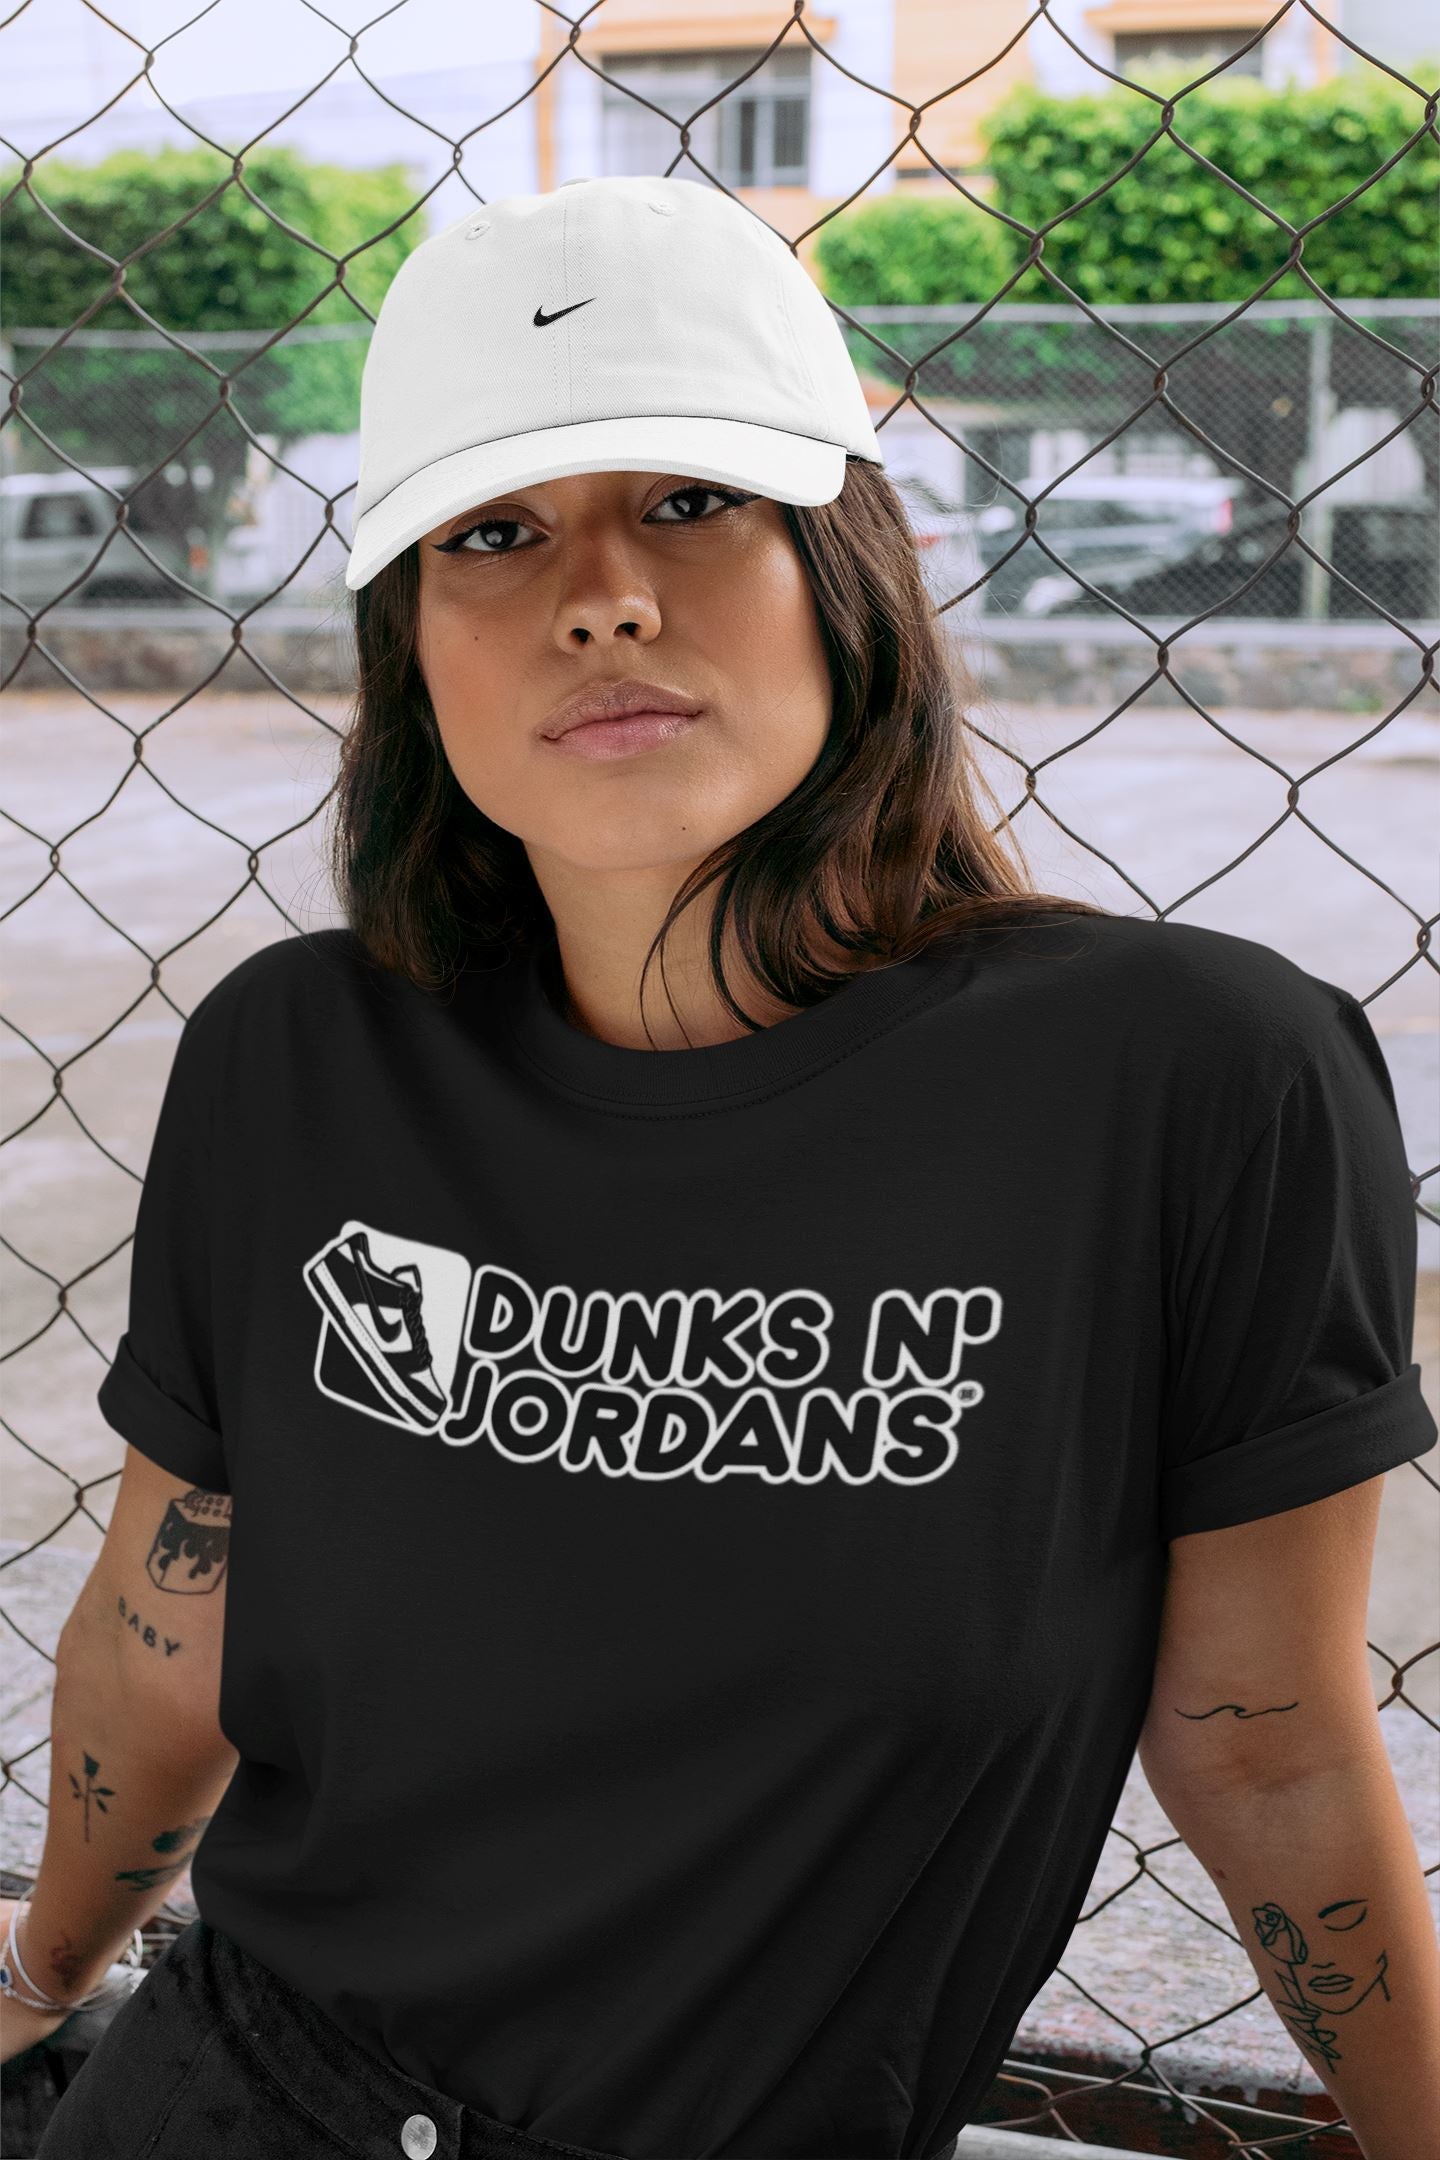 Dunk Panda Sneaker Match Tees Dunks N Jordans Sneaker Tees Dunk Panda Sneaker Release Tees Unisex Shirts